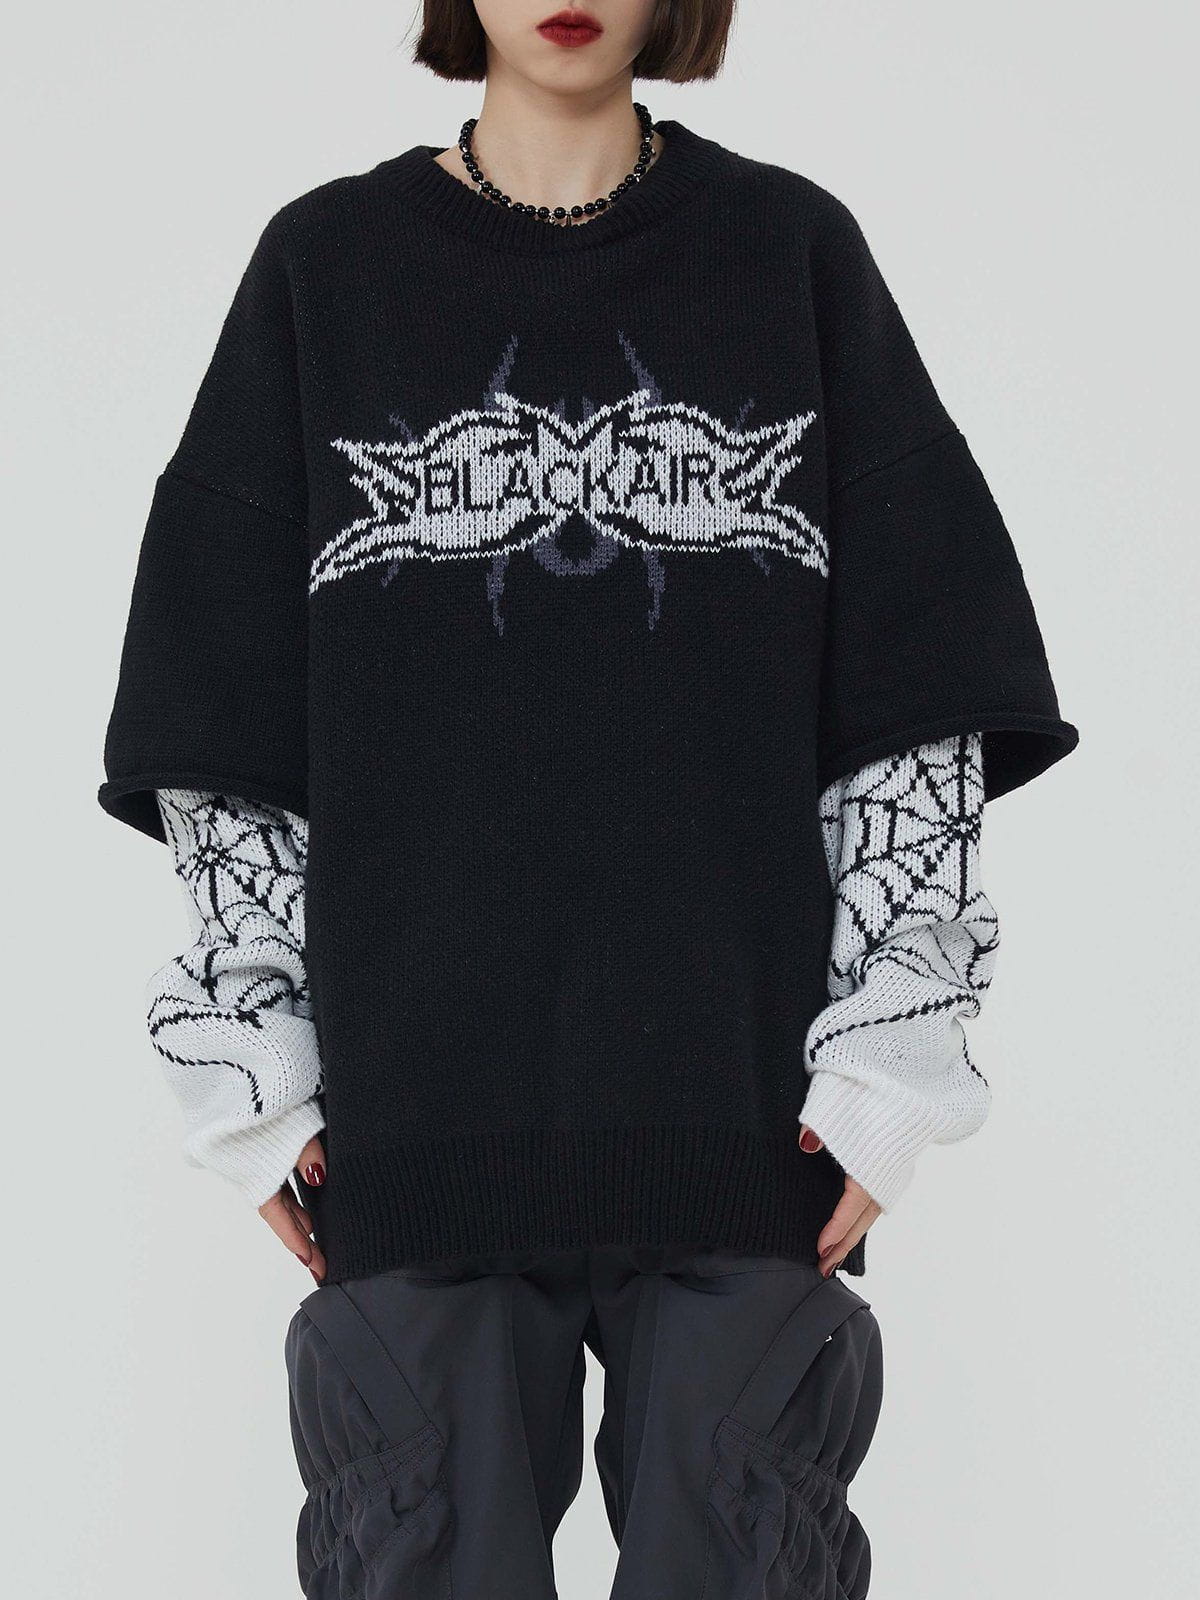 Eprezzy® - Fake Two Spider Web Jacquard Sweater Streetwear Fashion - eprezzy.com